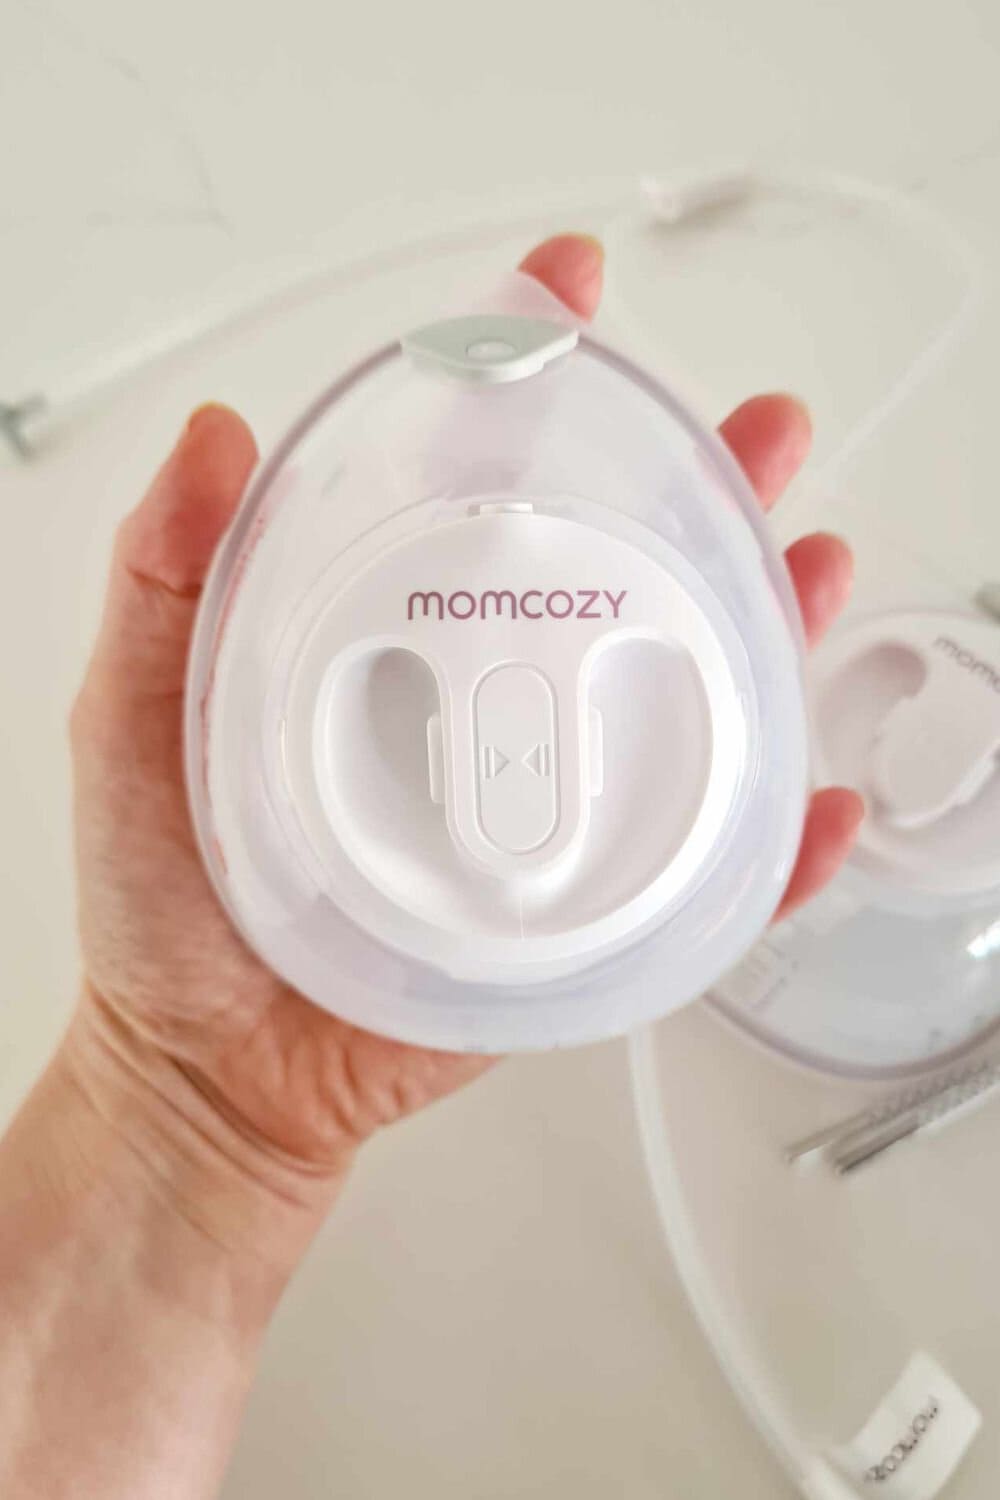 momcozy v1 milk collection cup